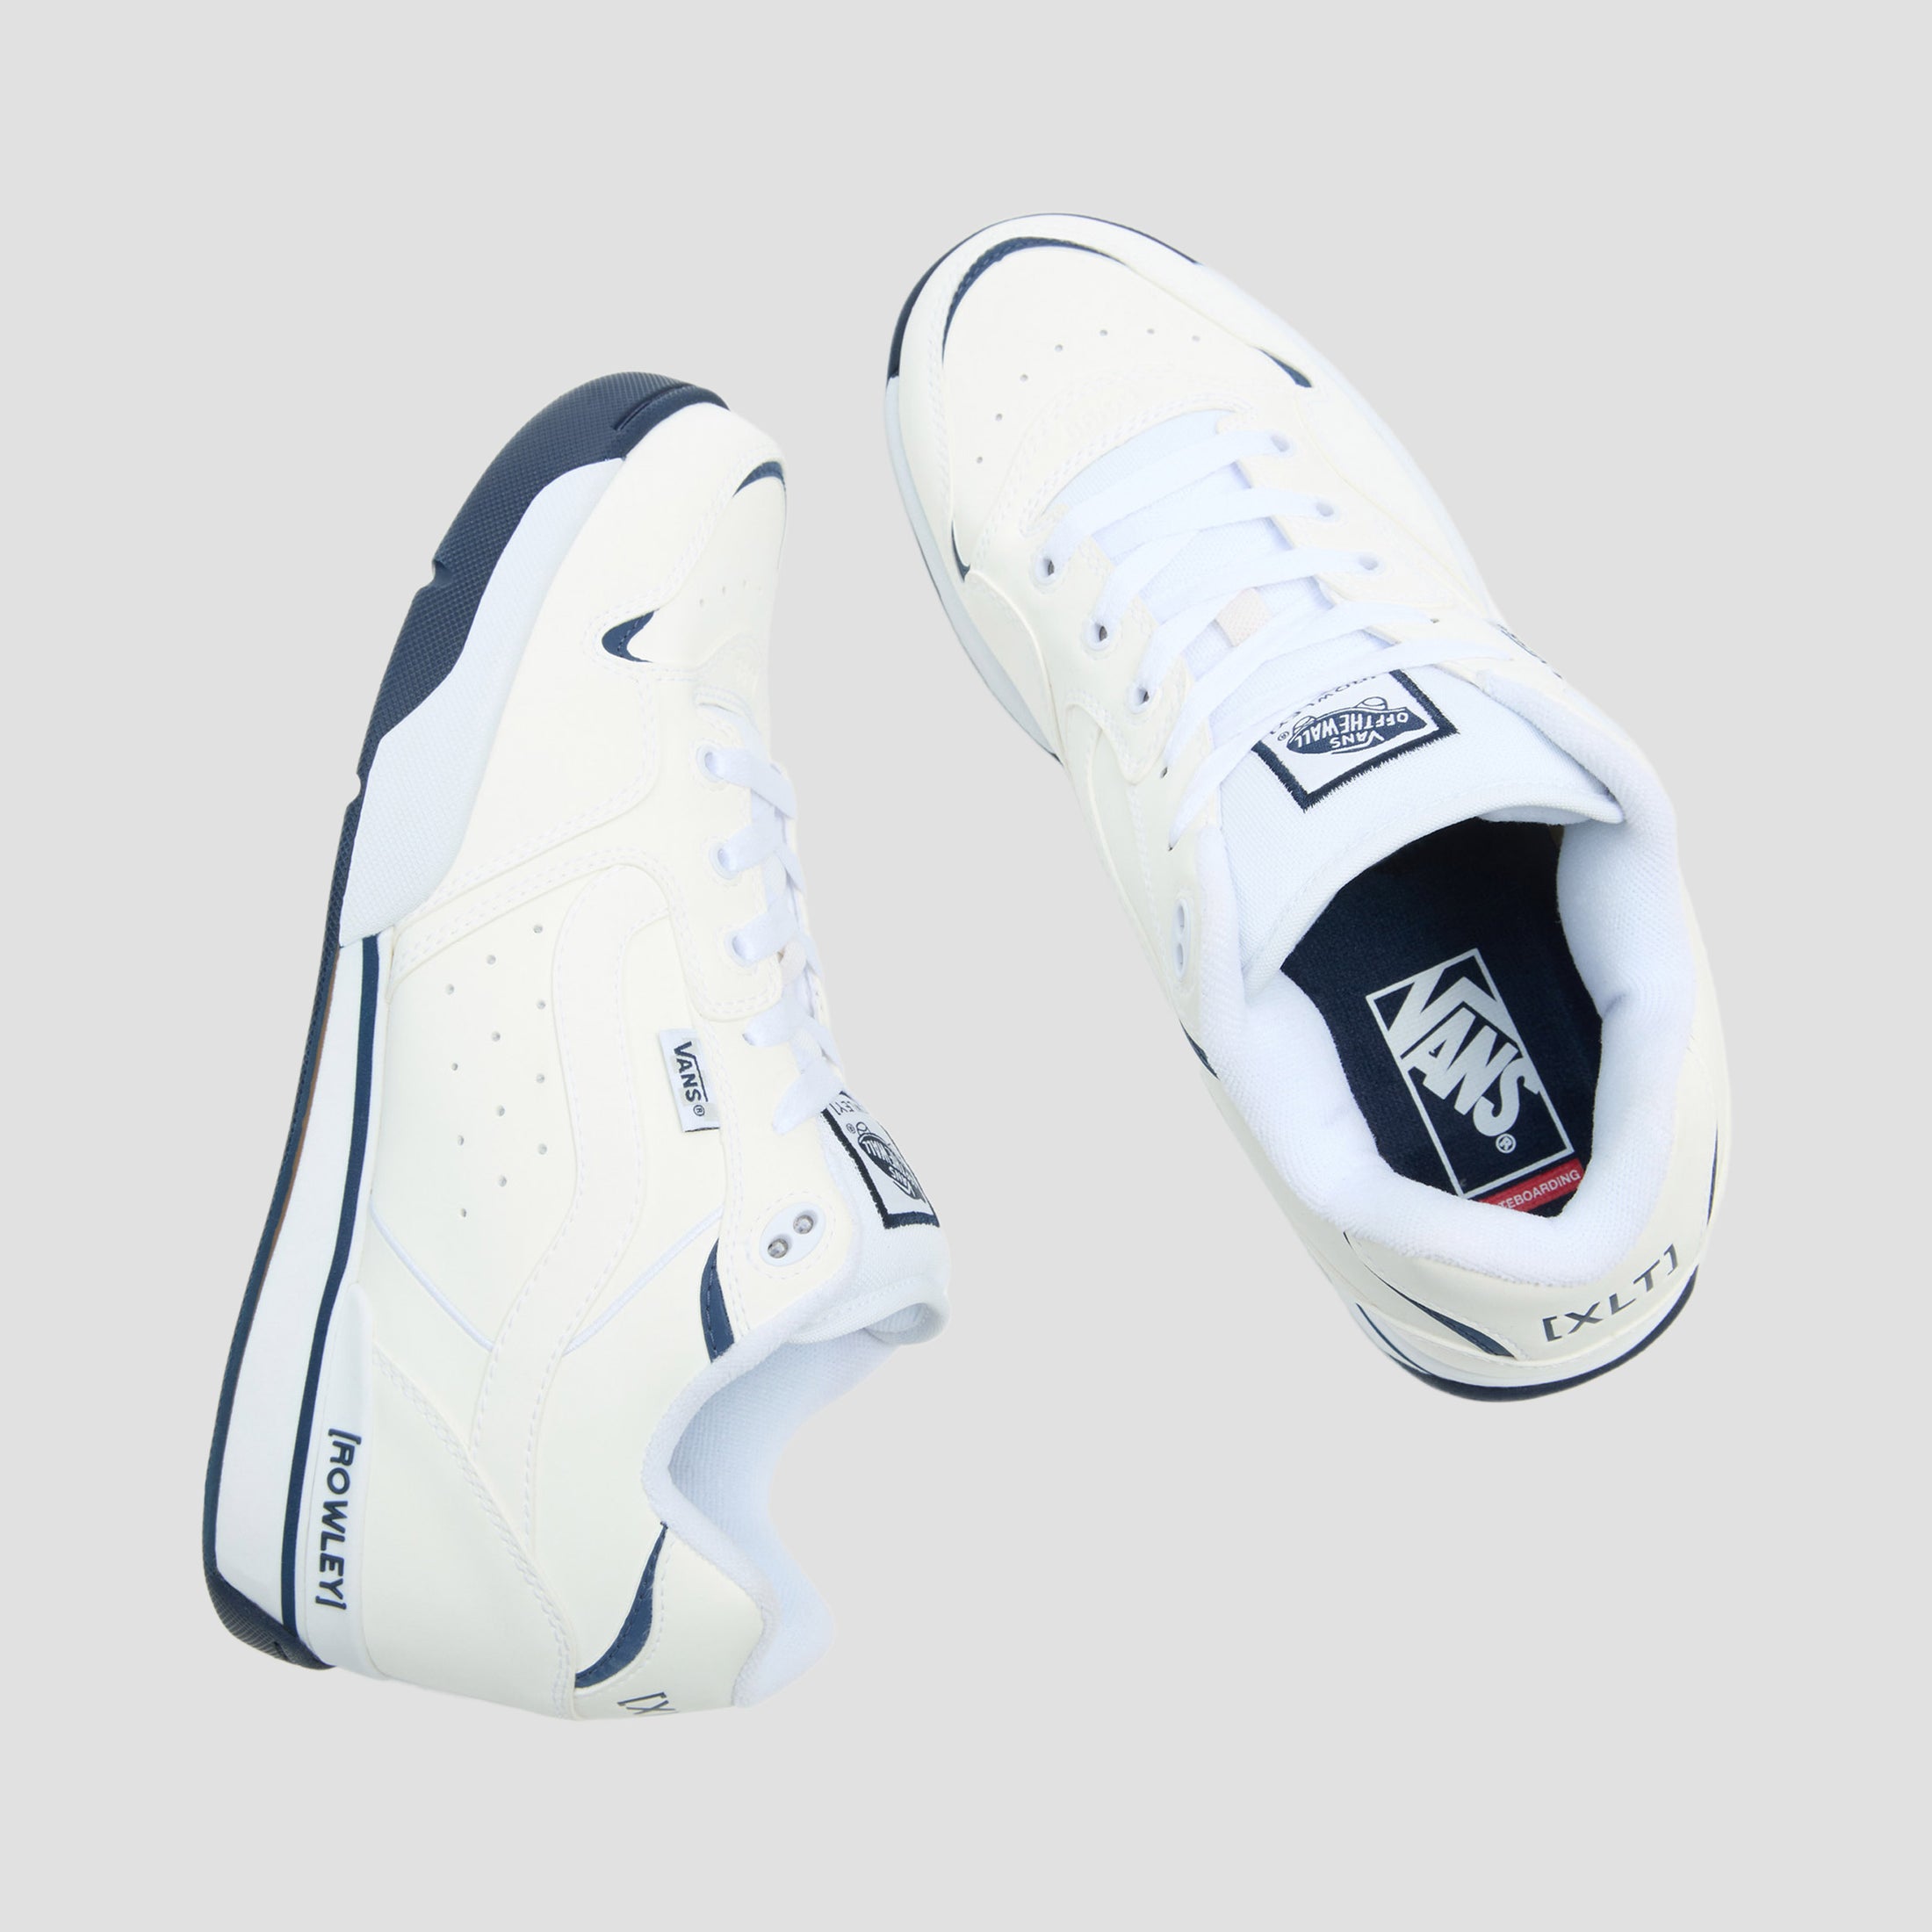 Vans Rowley XLT VCU Skate Shoes White / Navy